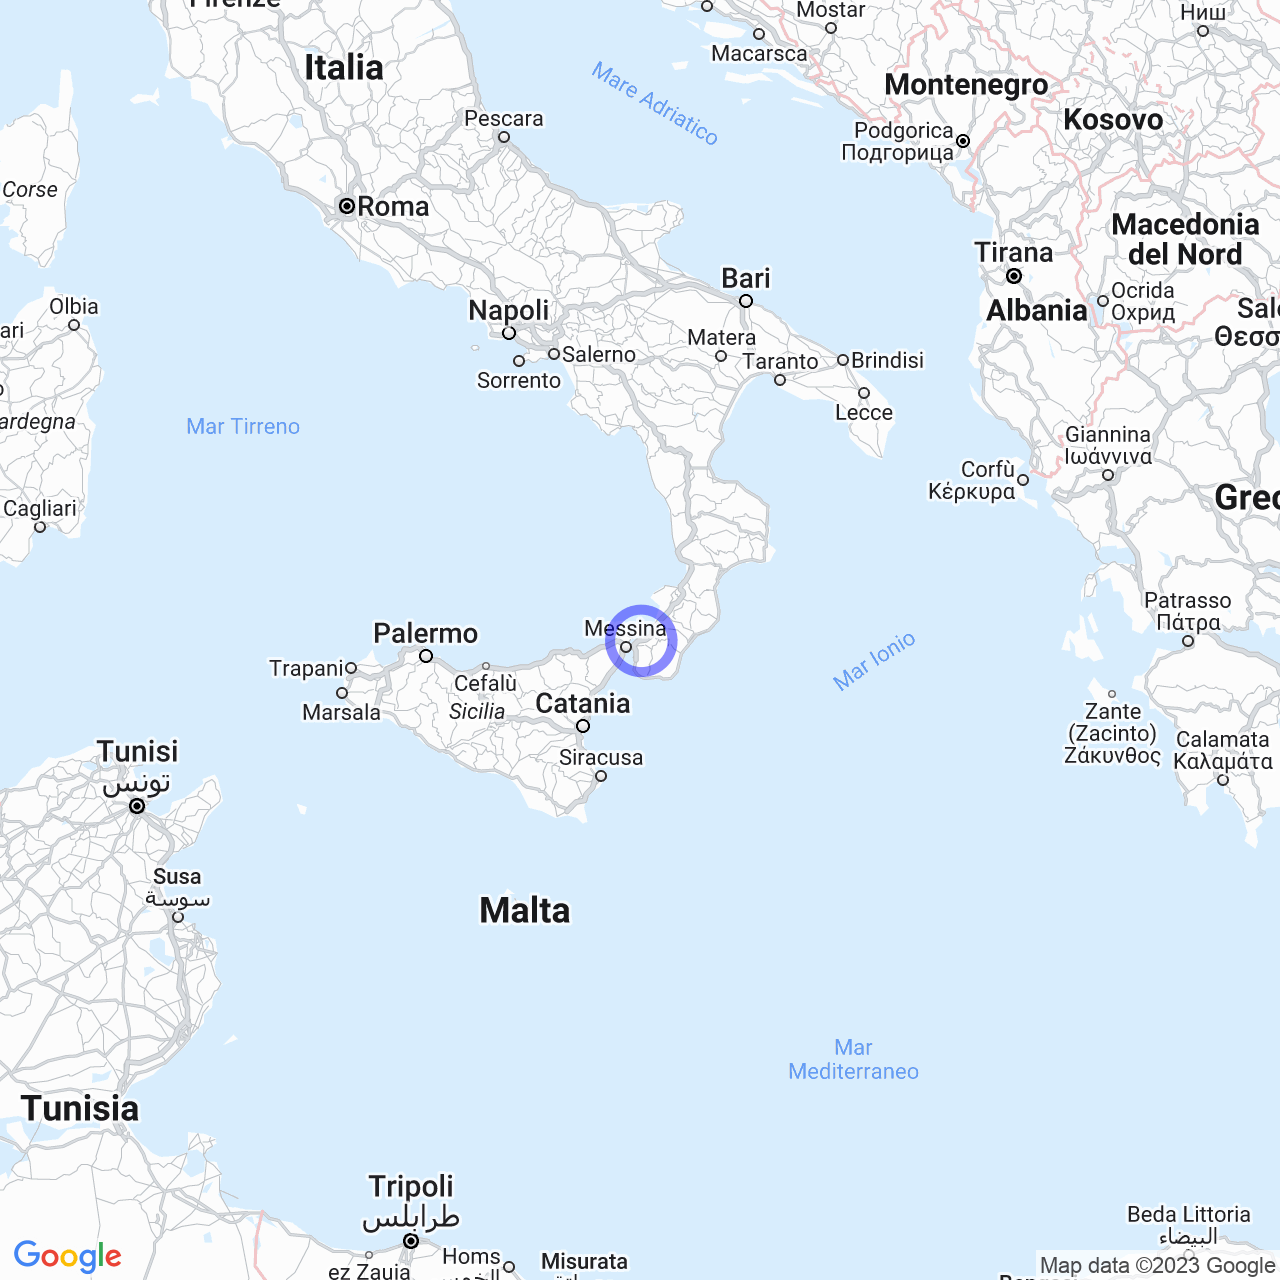 Scilla: Tourist paradise on the Strait of Messina.